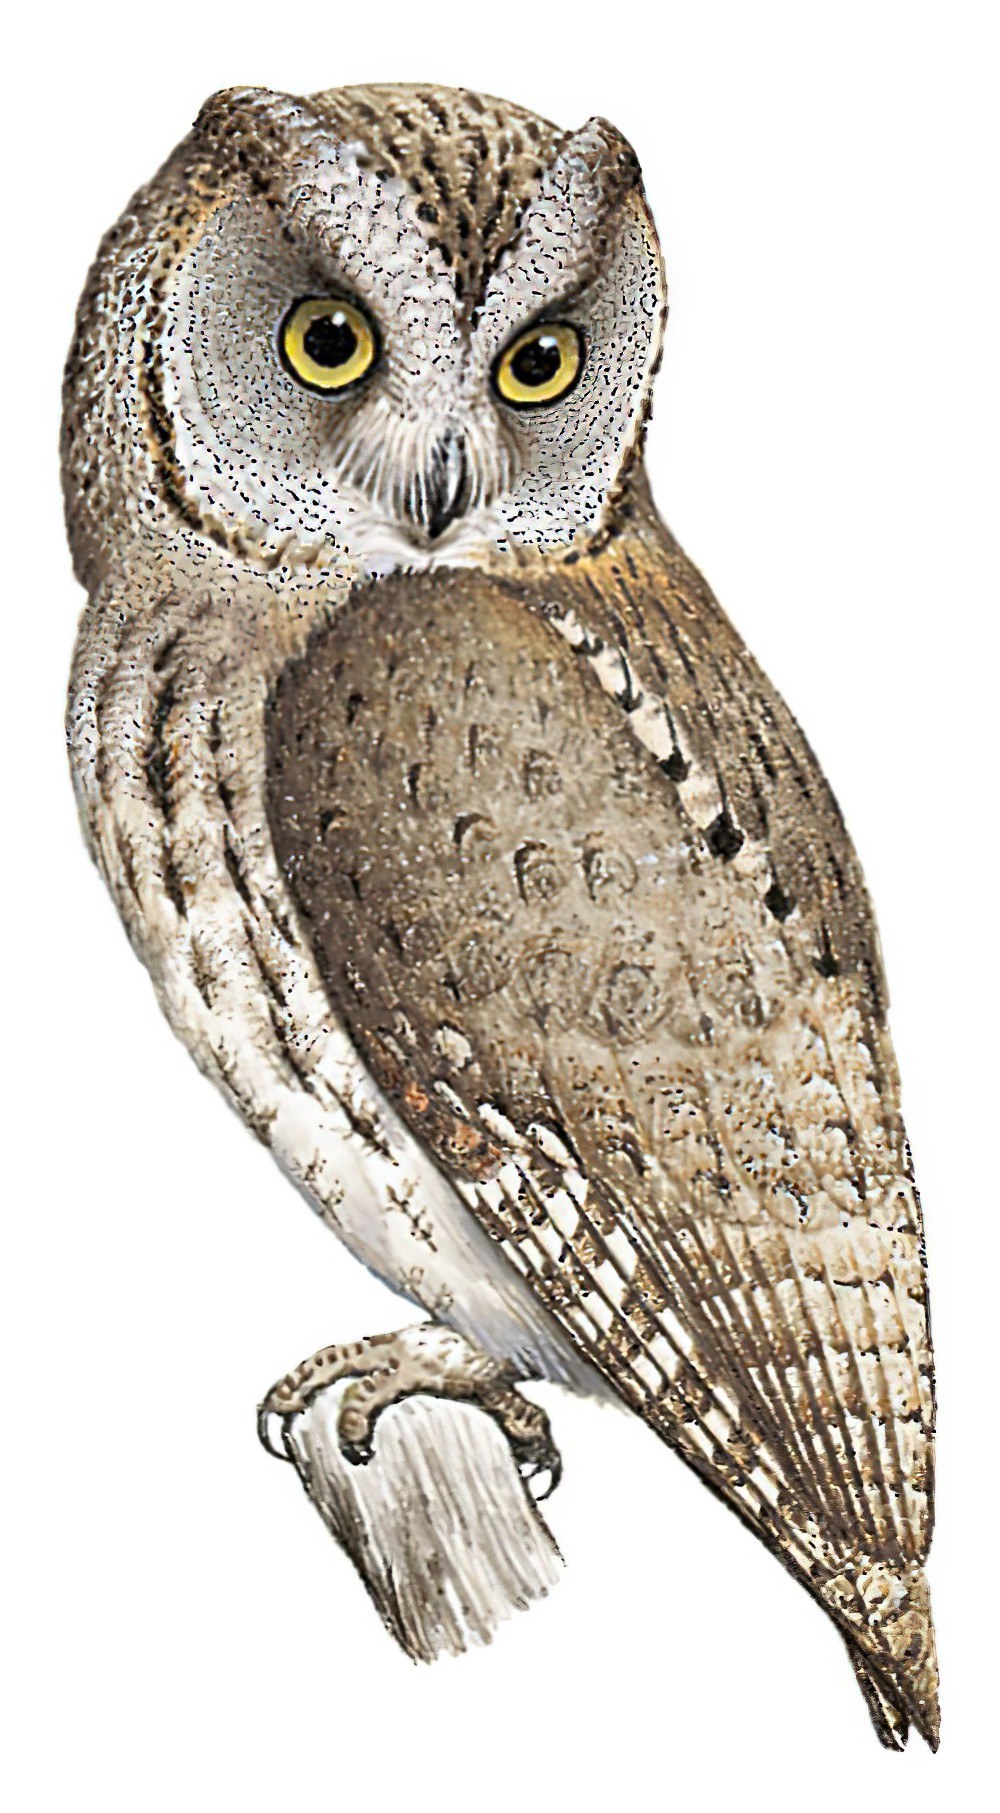 Socotra Scops-Owl / Otus socotranus